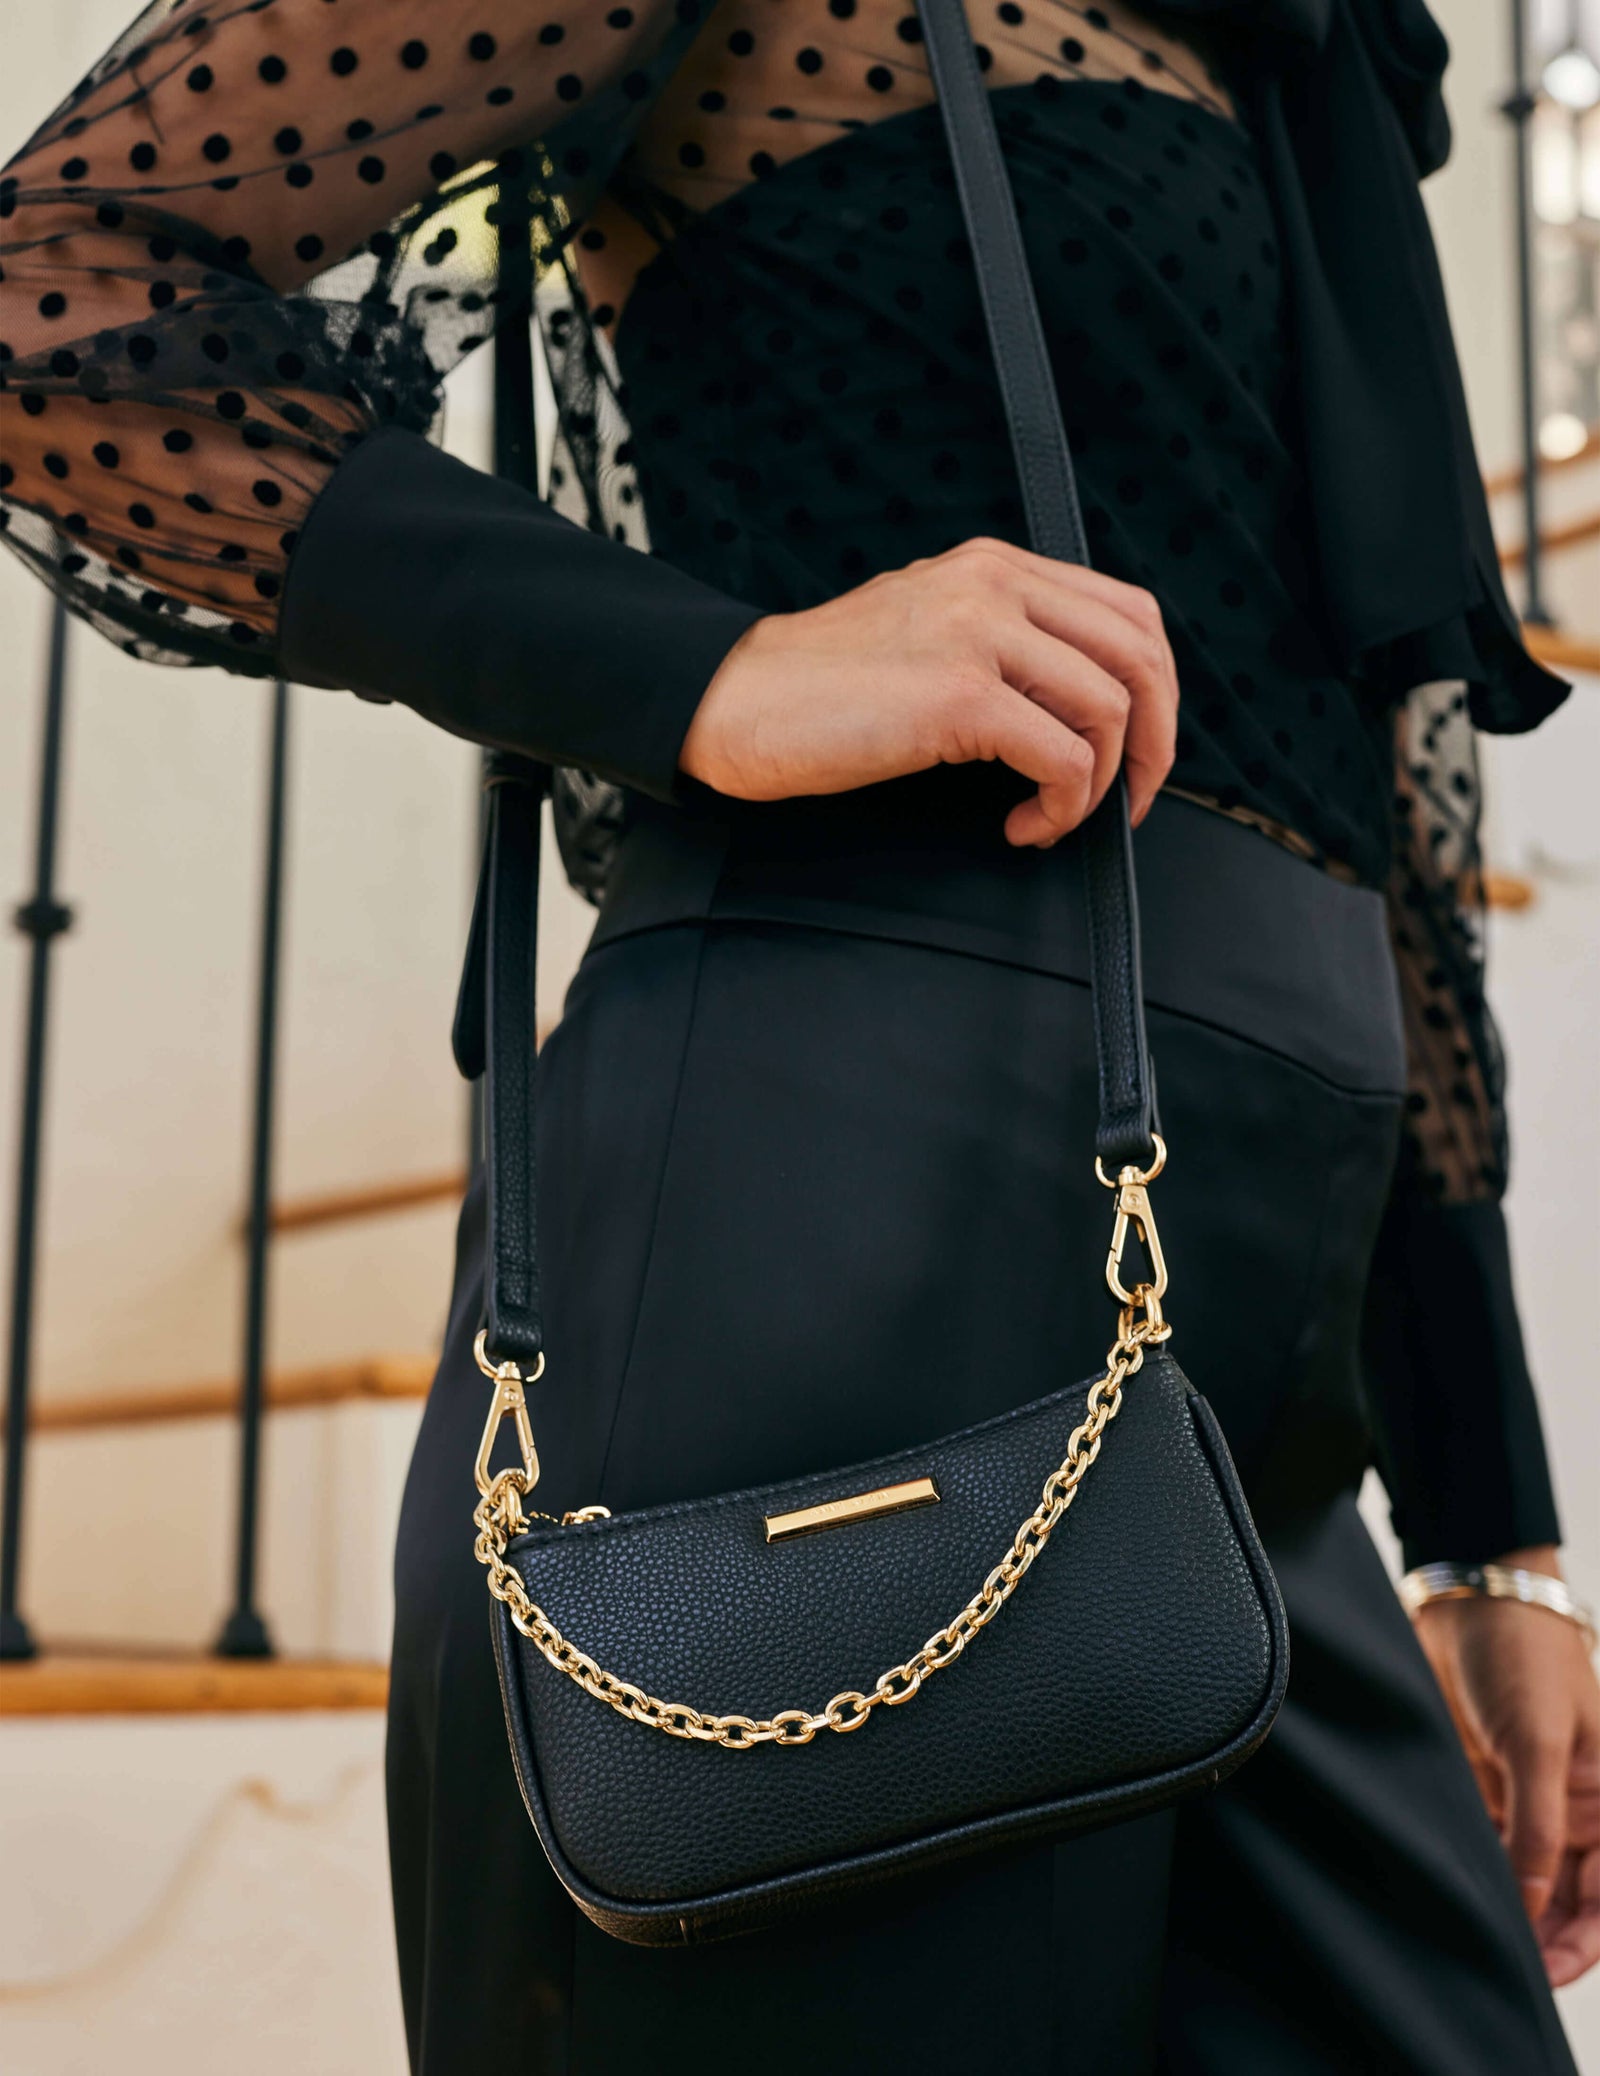 Calvin Klein Metal Bags & Handbags for Women for sale